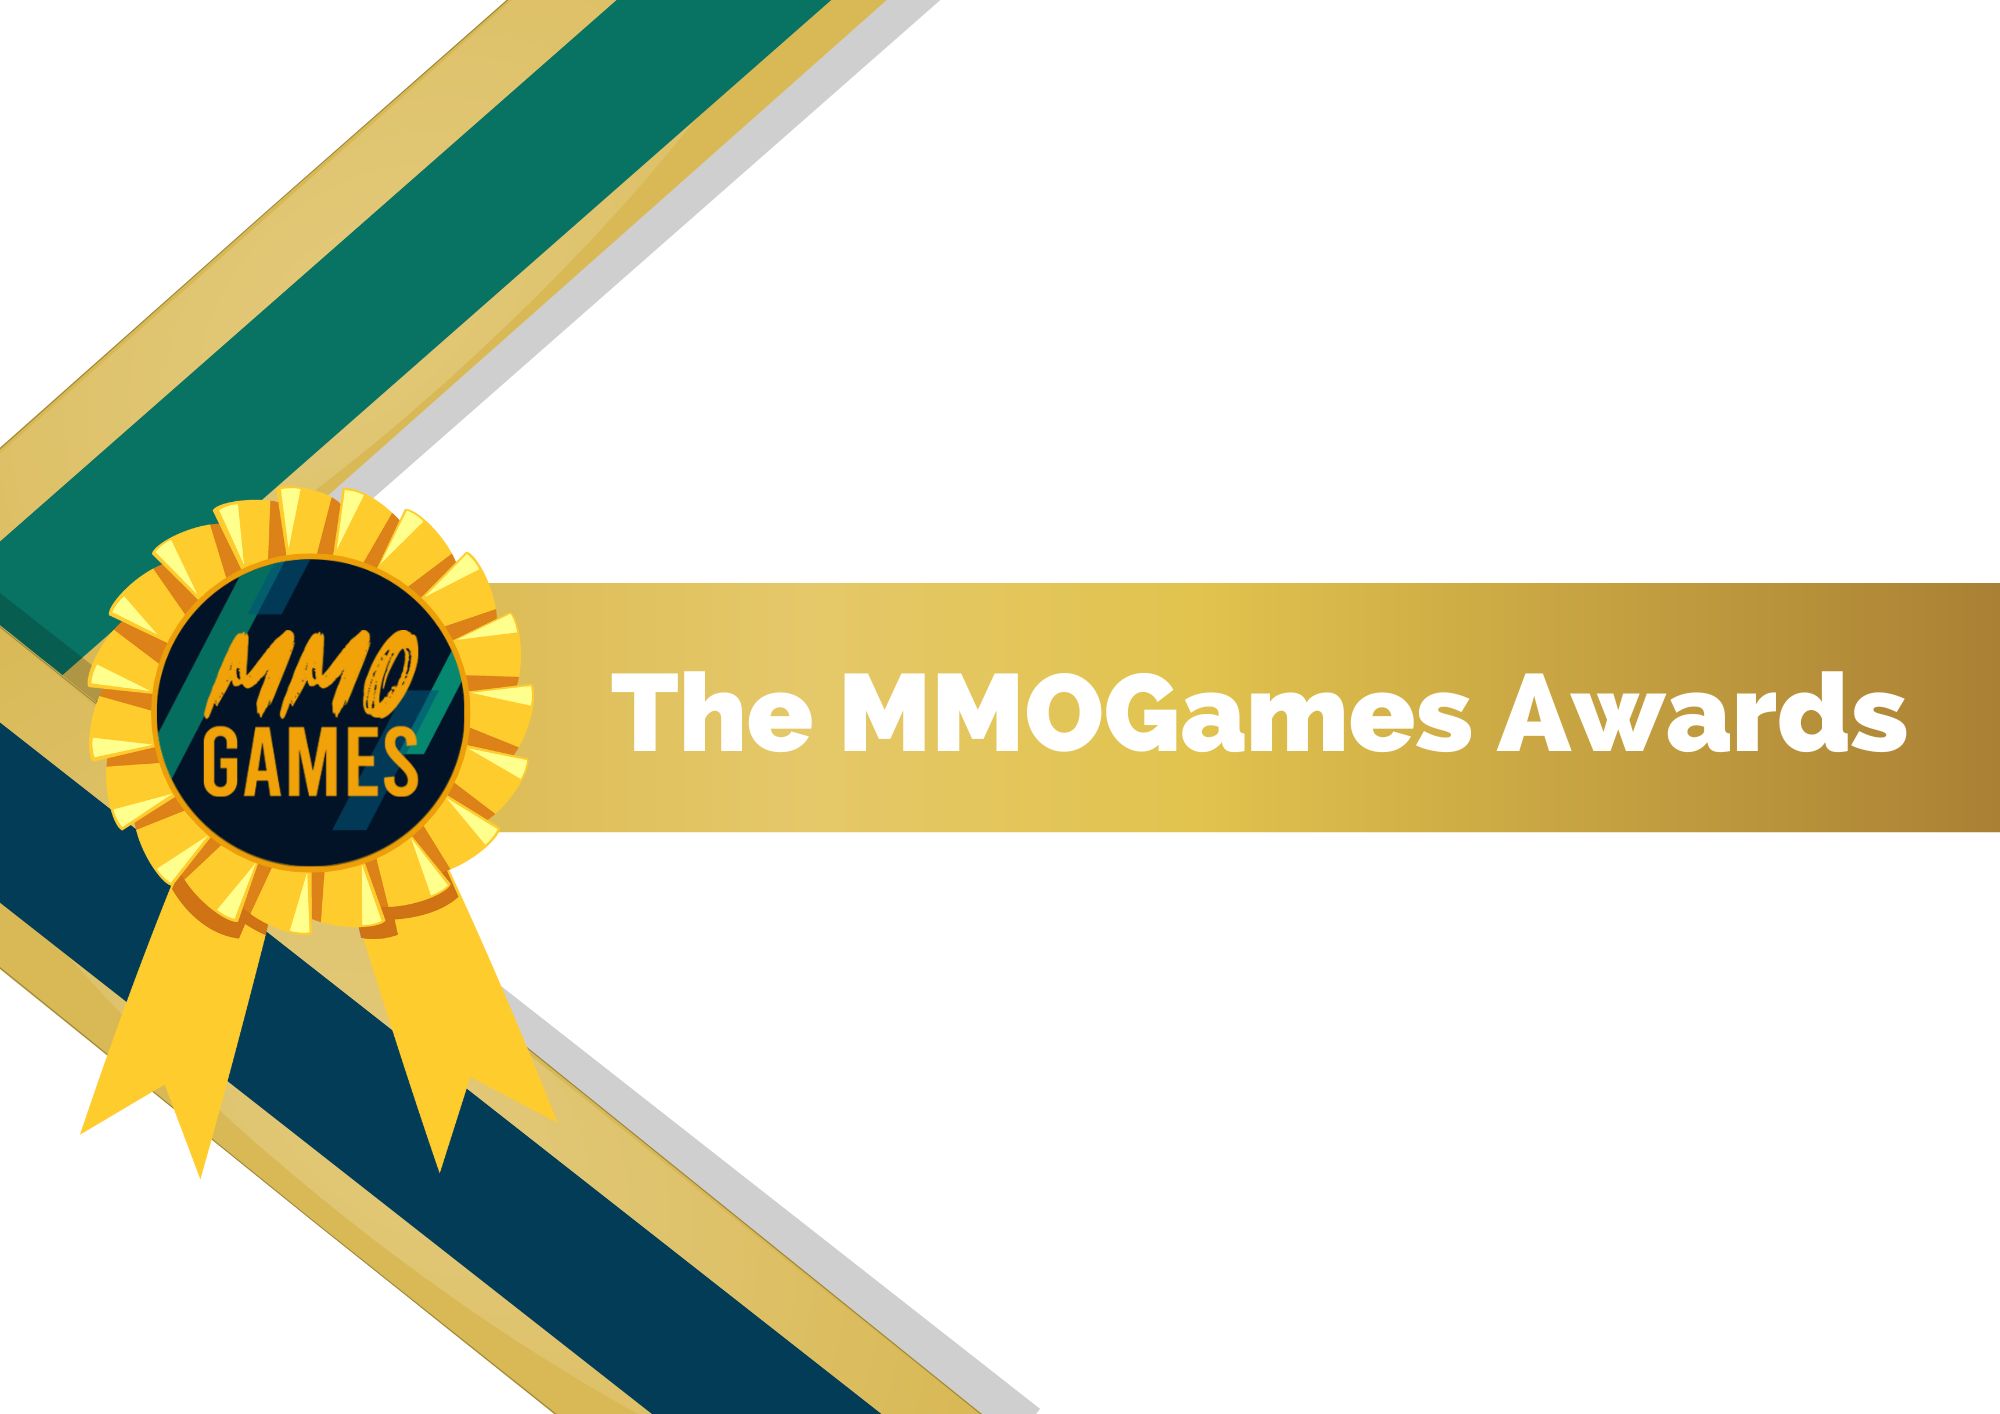 The MMO Games Award Winners 2022